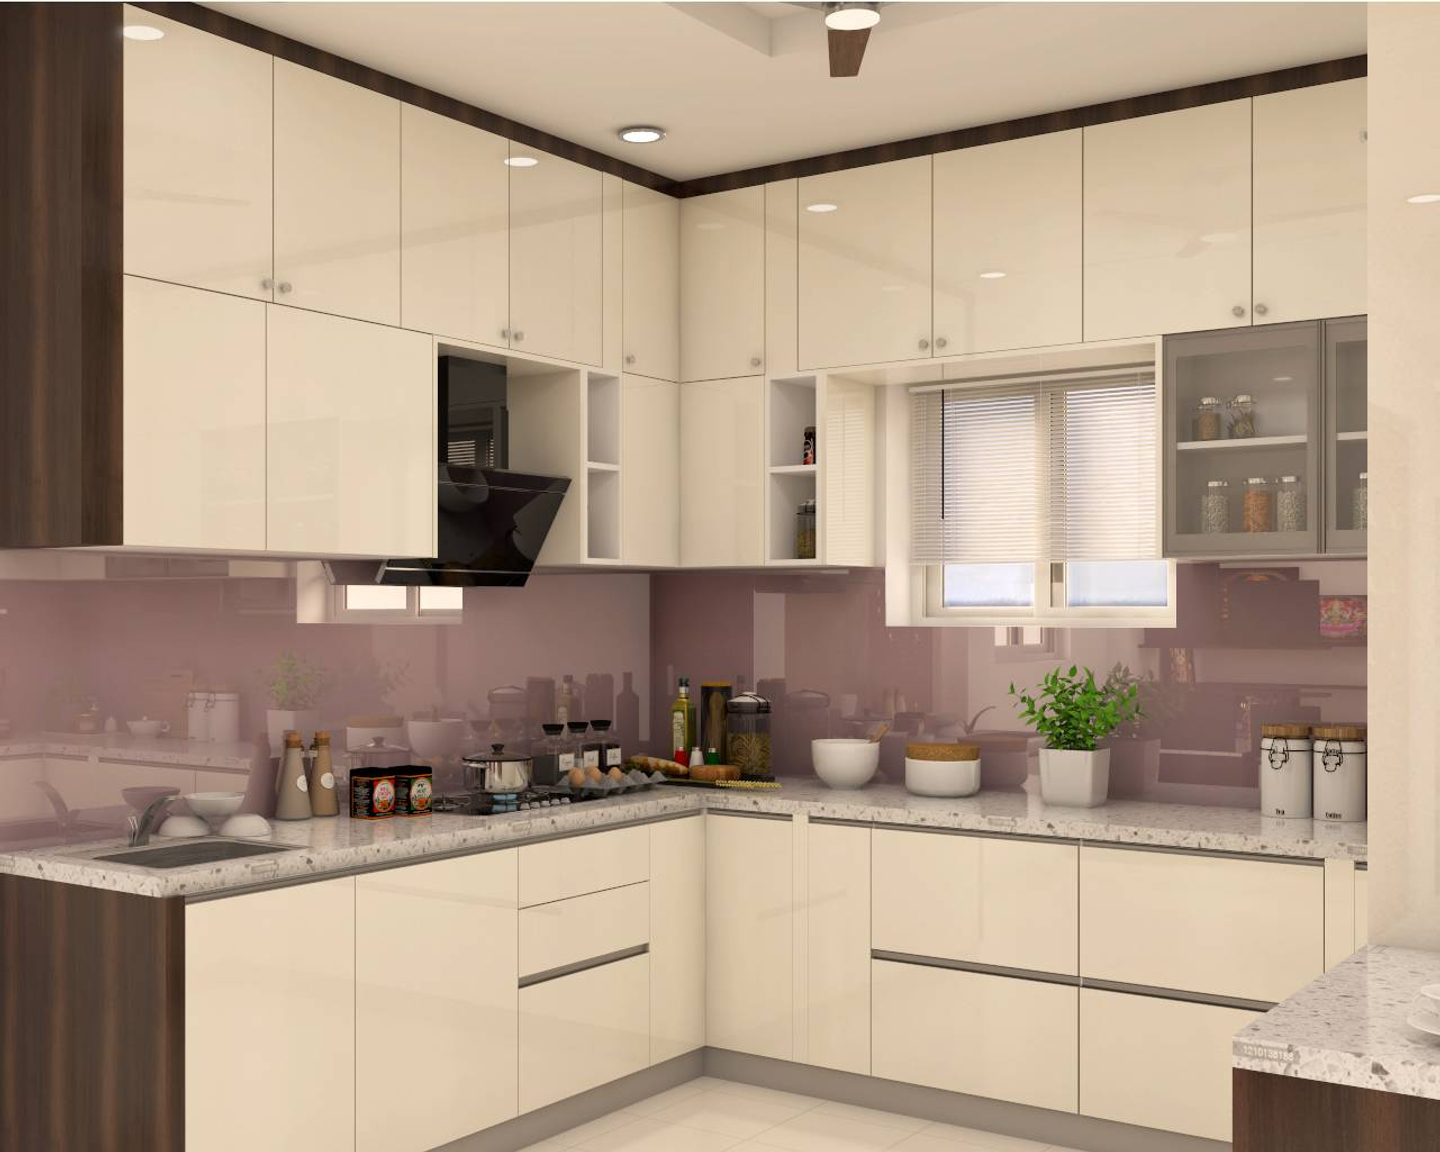 Contemporary U-Shaped White Kitchen Design With Dark Wooden Detailing